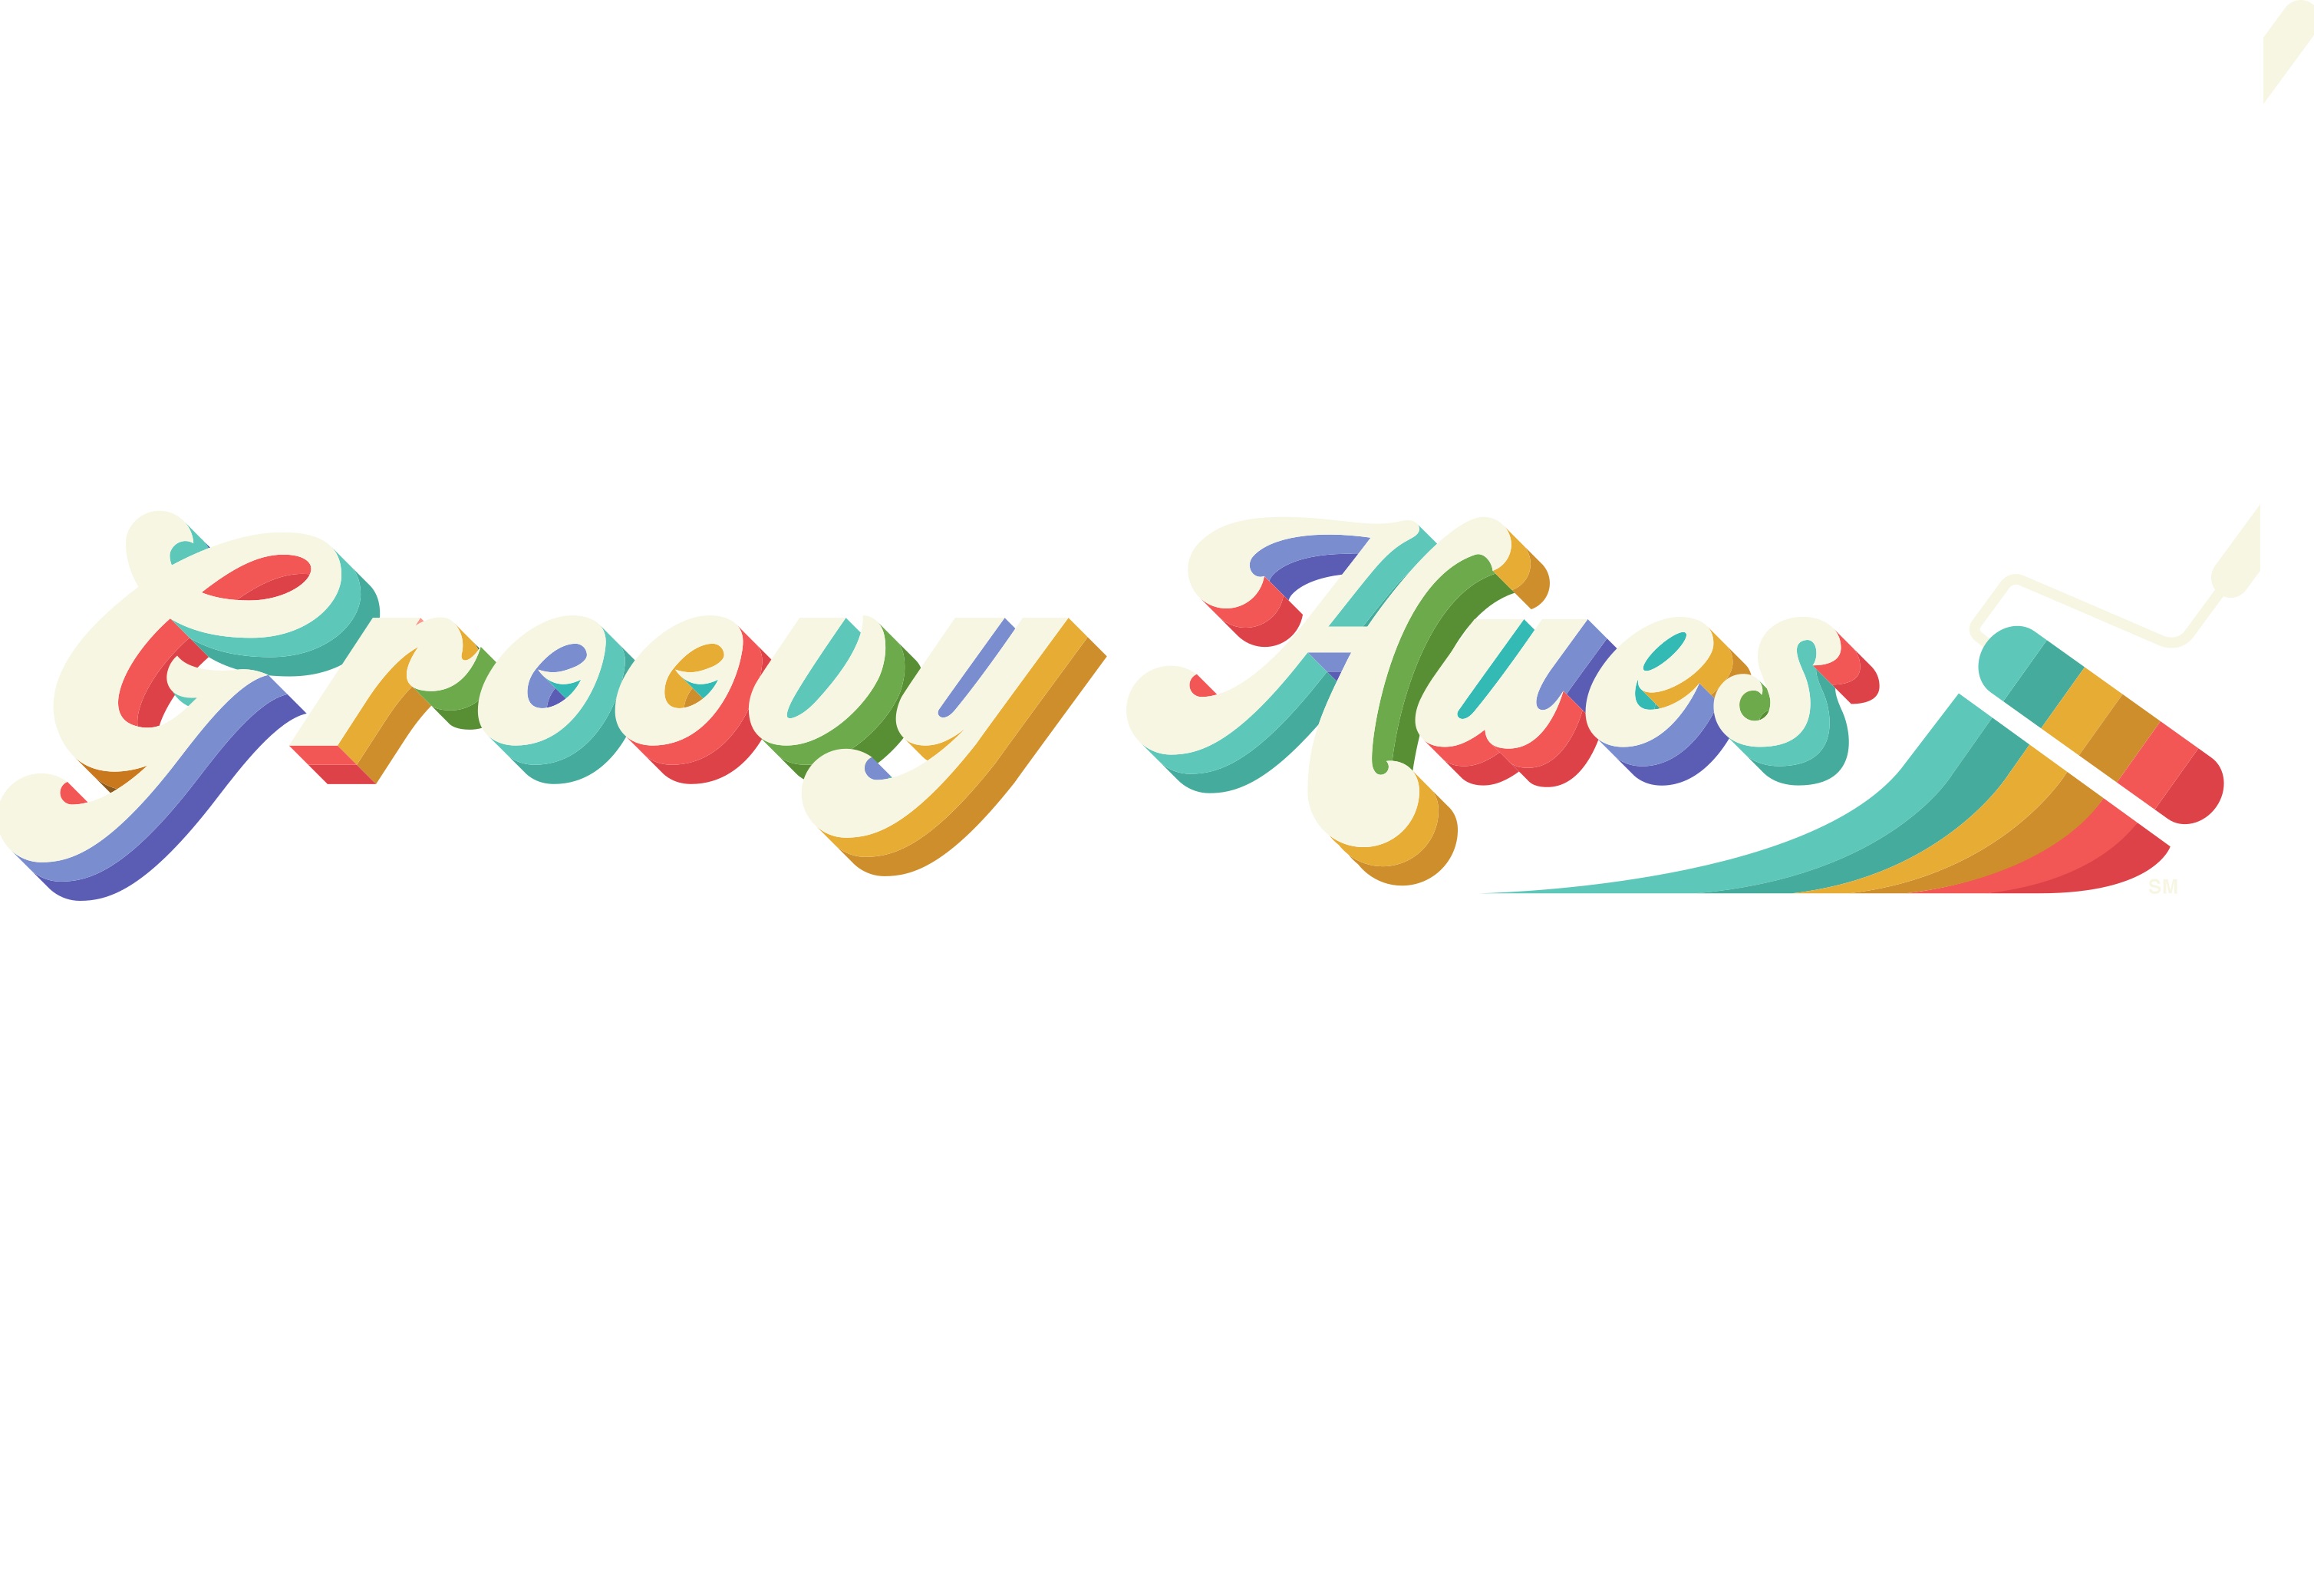 Groovy-logo2-5.jpg